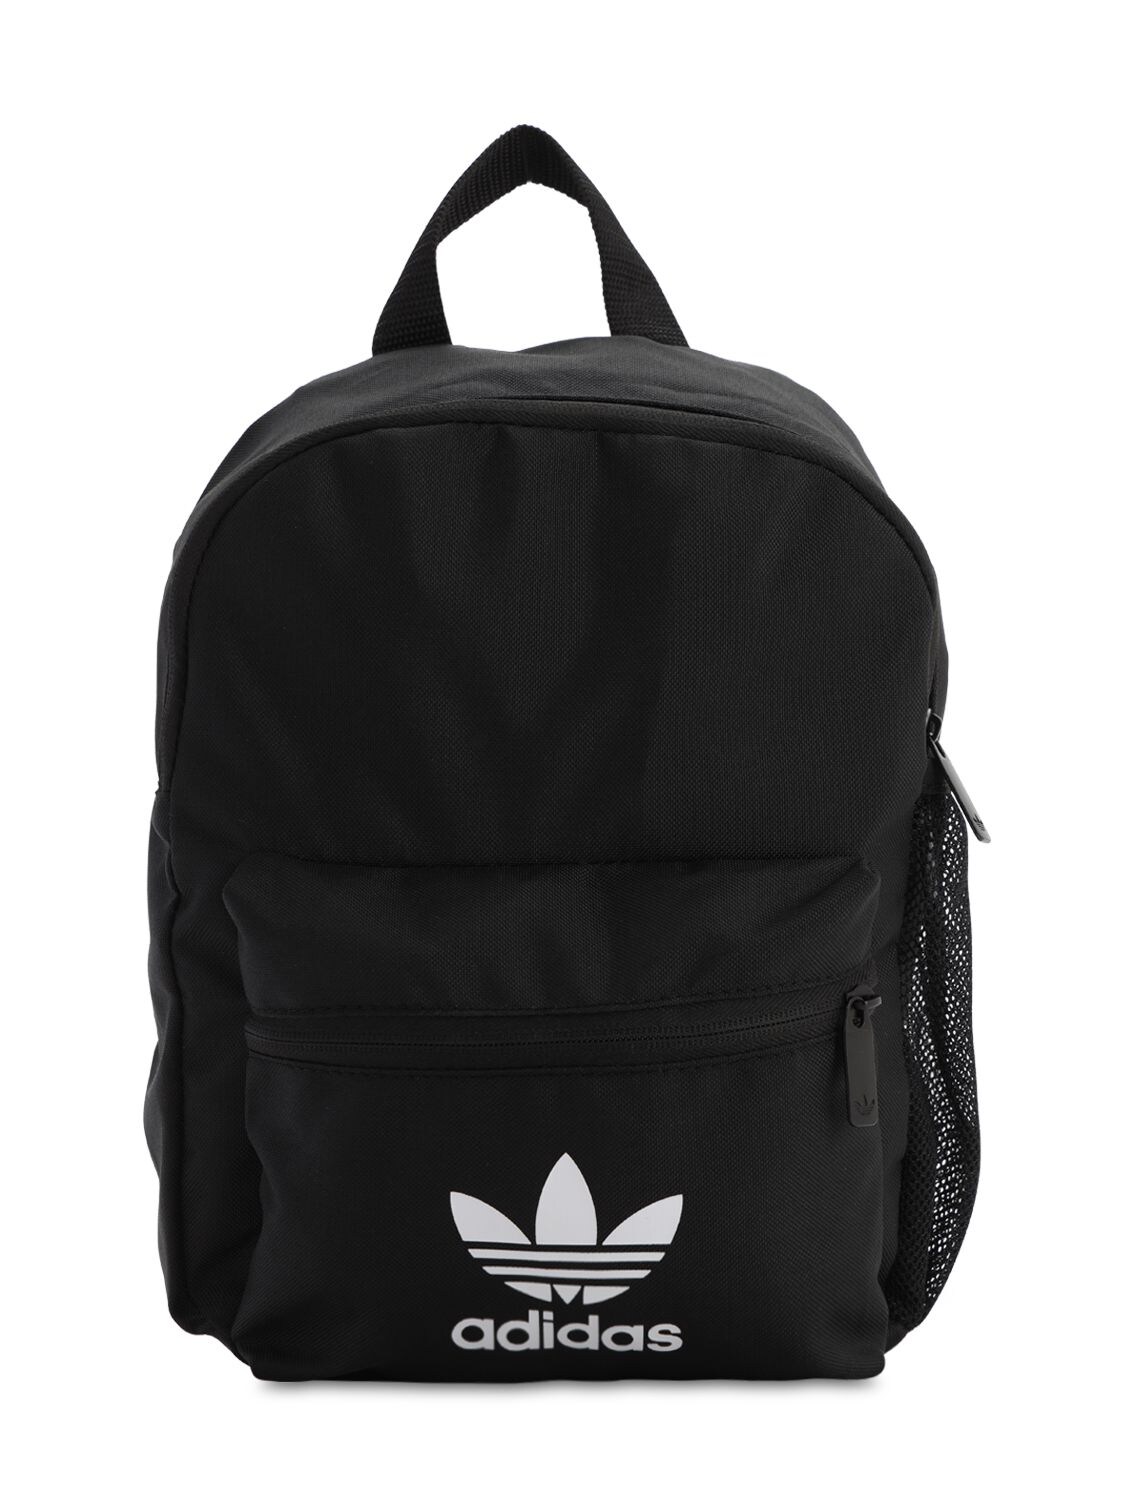 Adidas Originals Kids' Nylon Backpack In Black